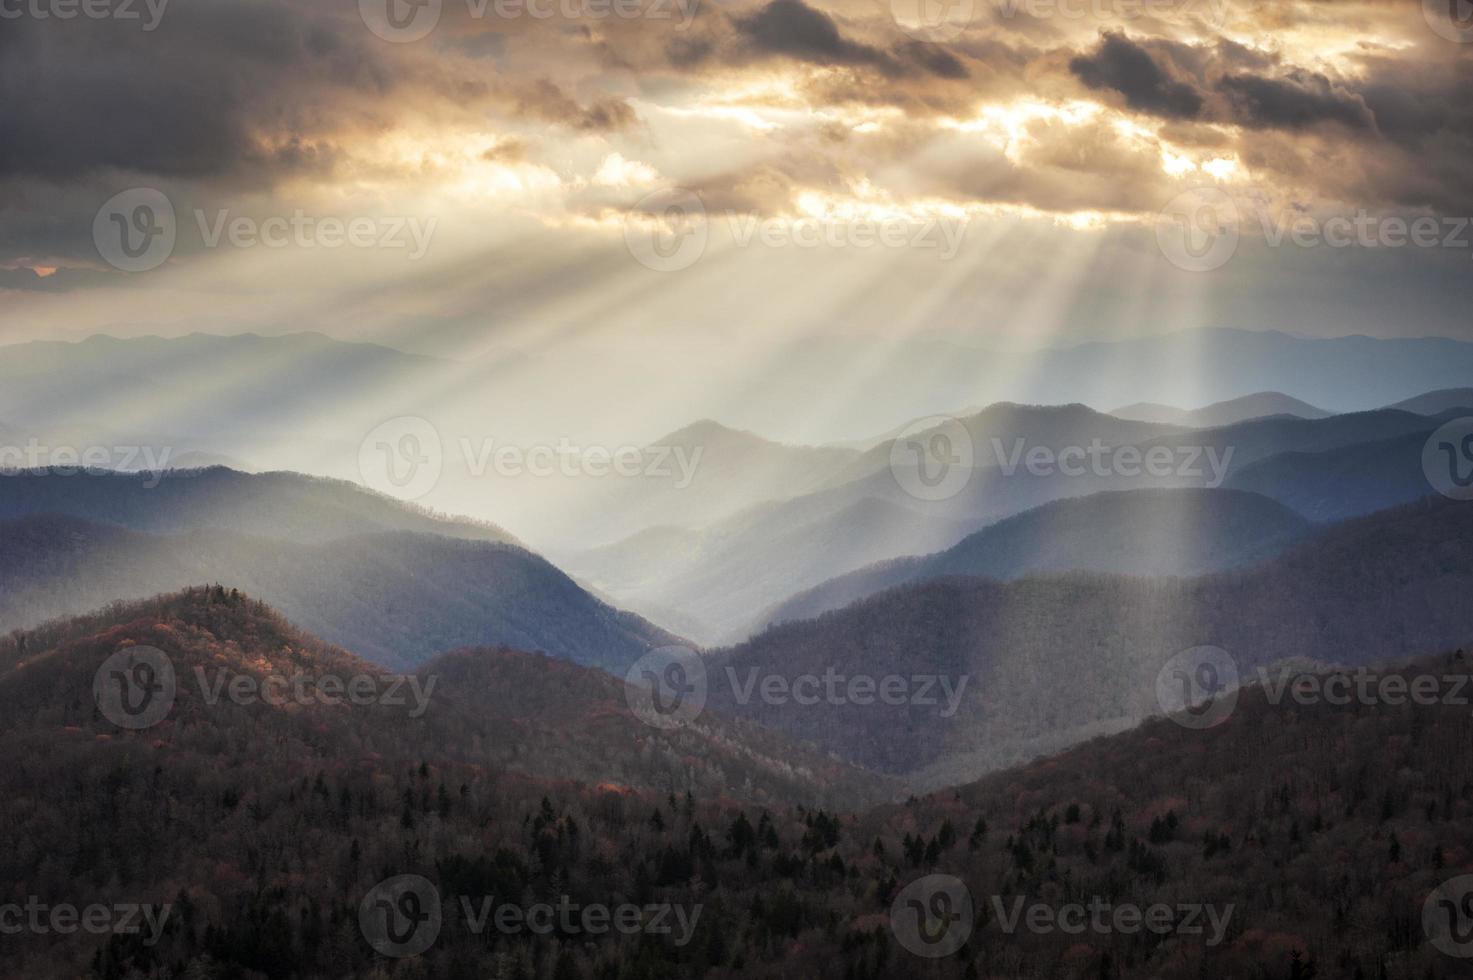 Appalachian Mountains schemerige lichtstralen op blauwe bergkammen foto